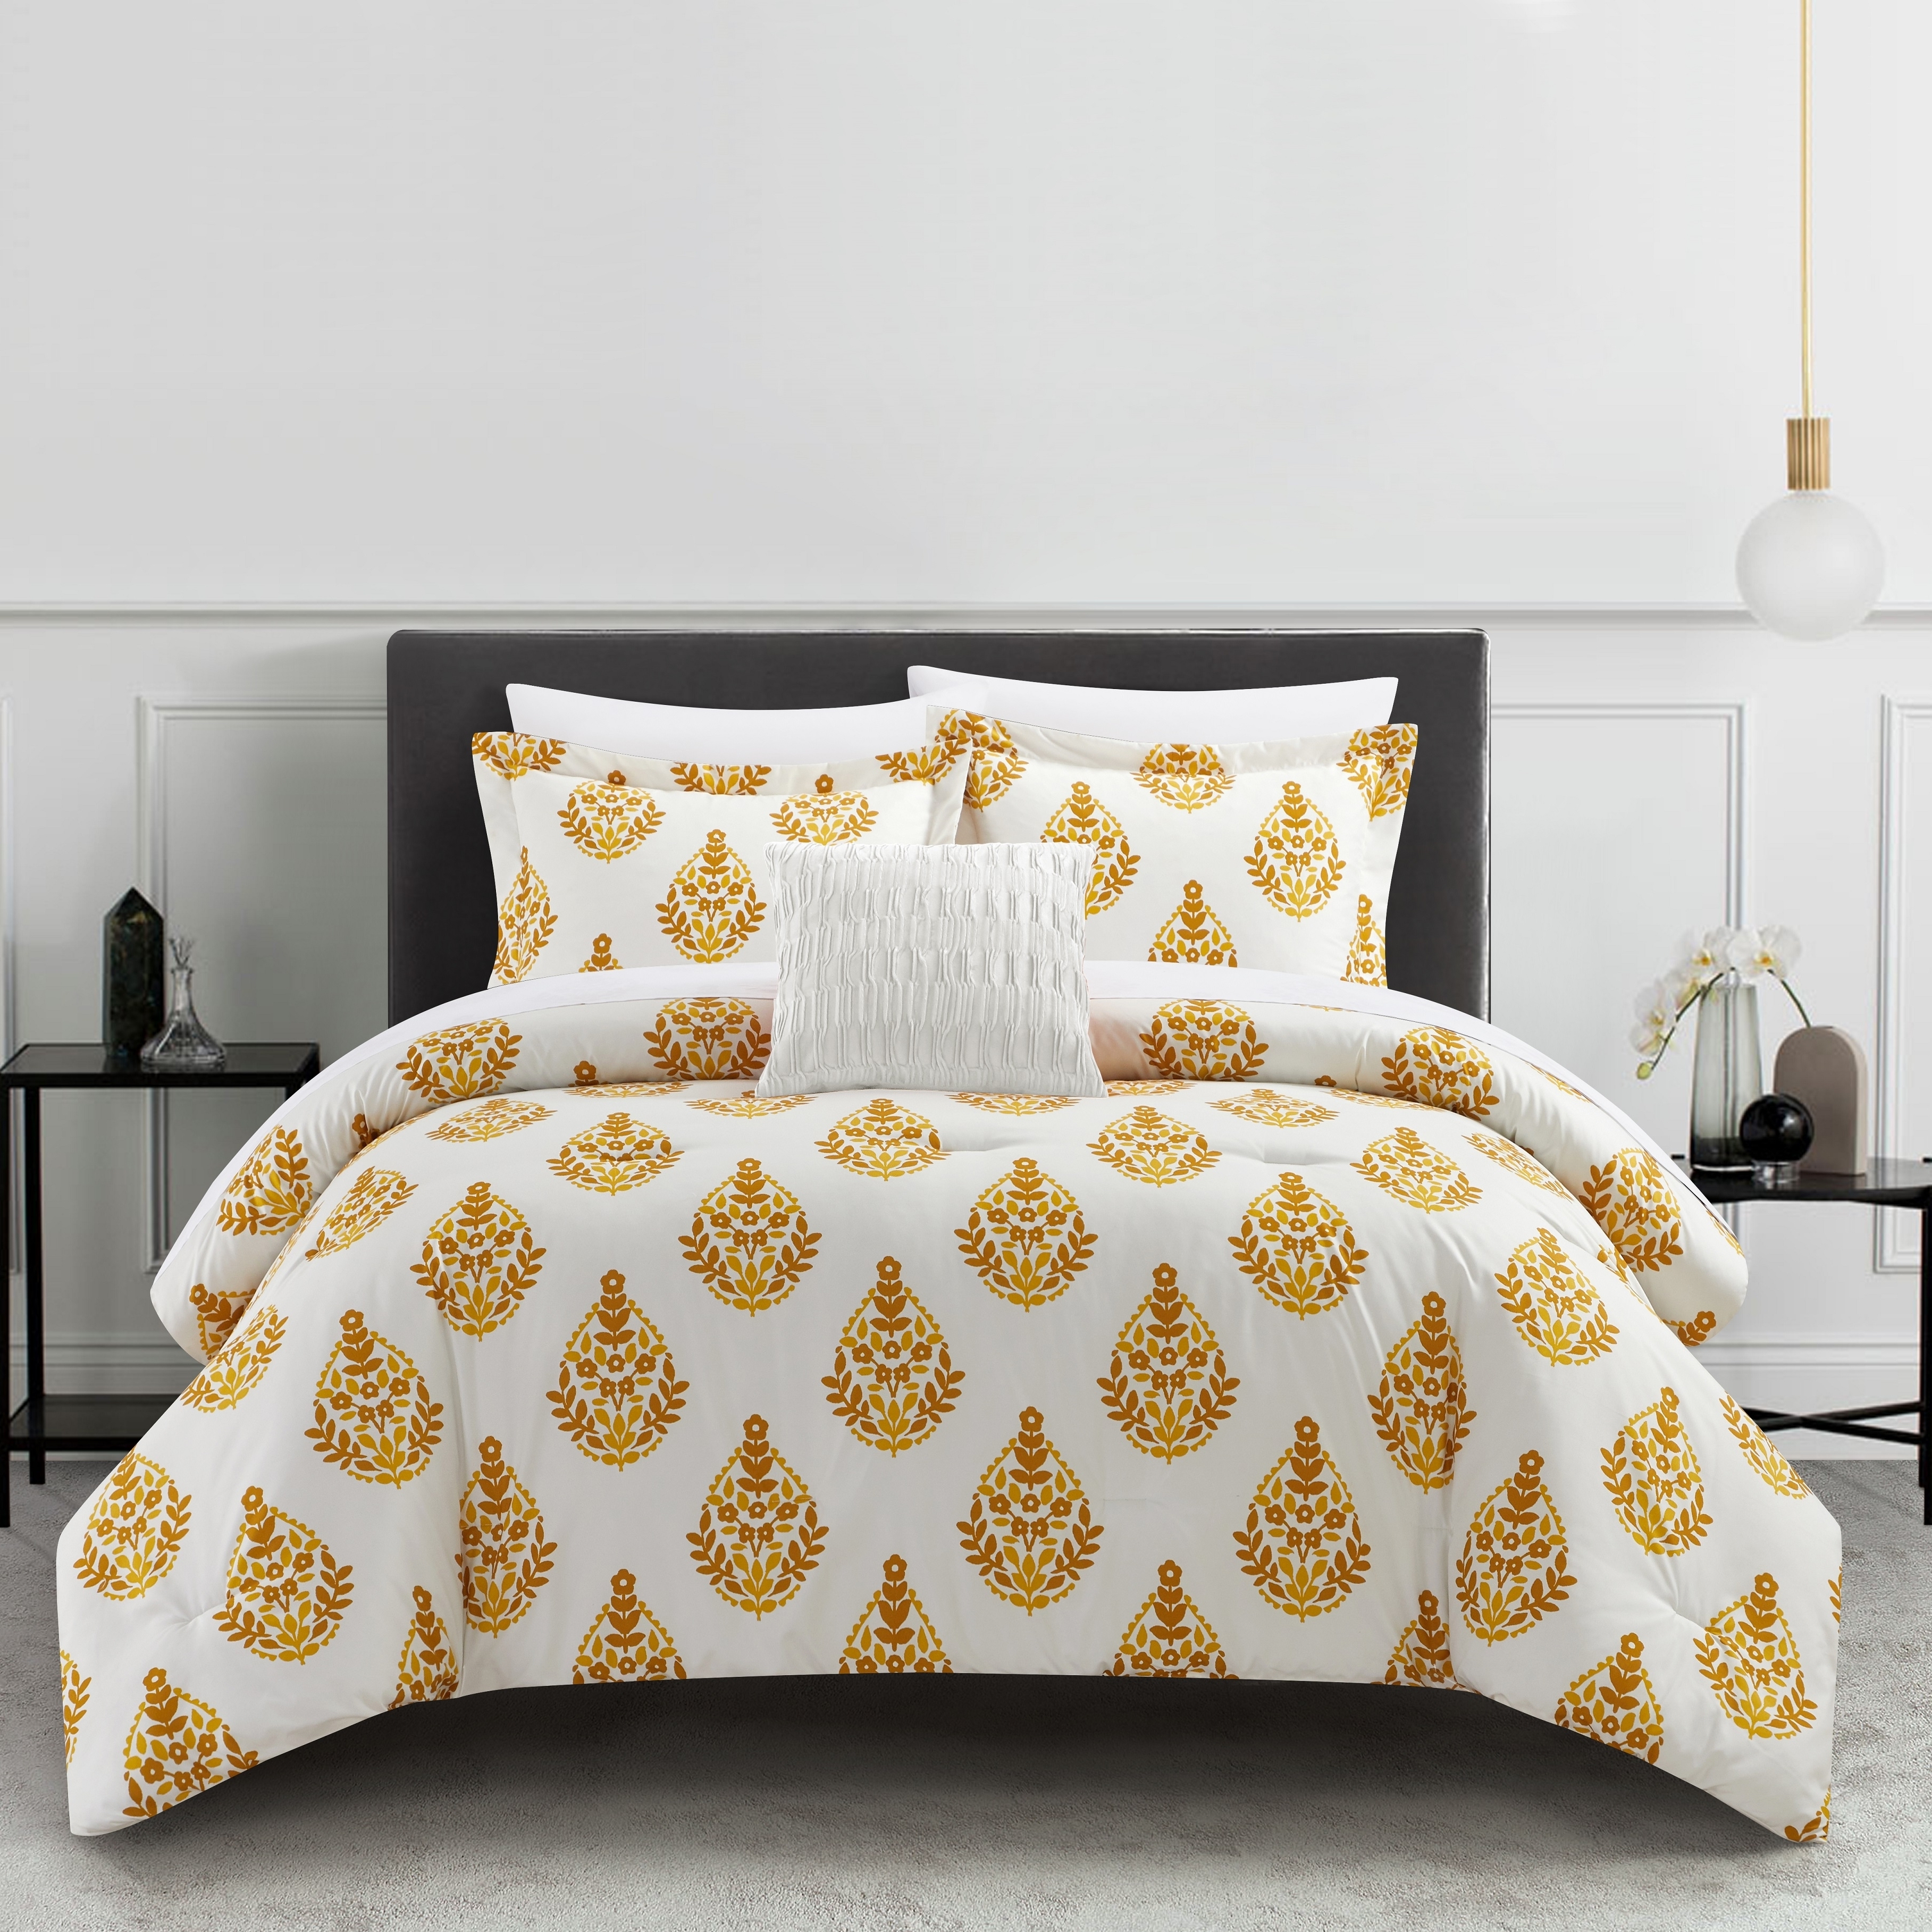 Clairessa 4 Or 3 Piece Comforter Set Floral Medallion Print Design Bedding - Yellow, Twin - 3 Piece